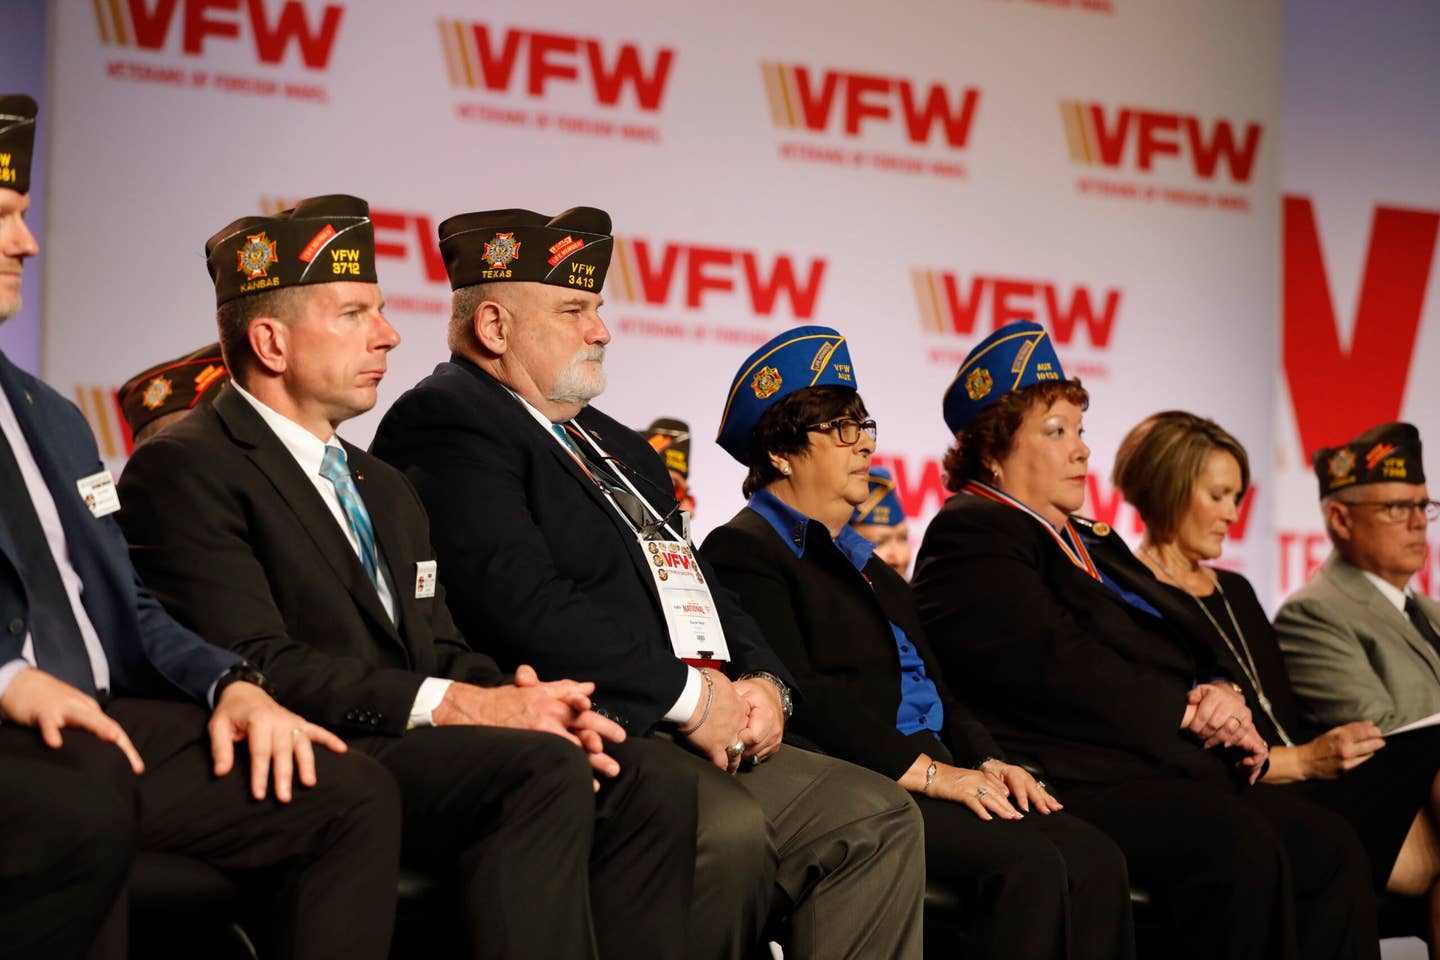 VFW veterans sitting on stage.